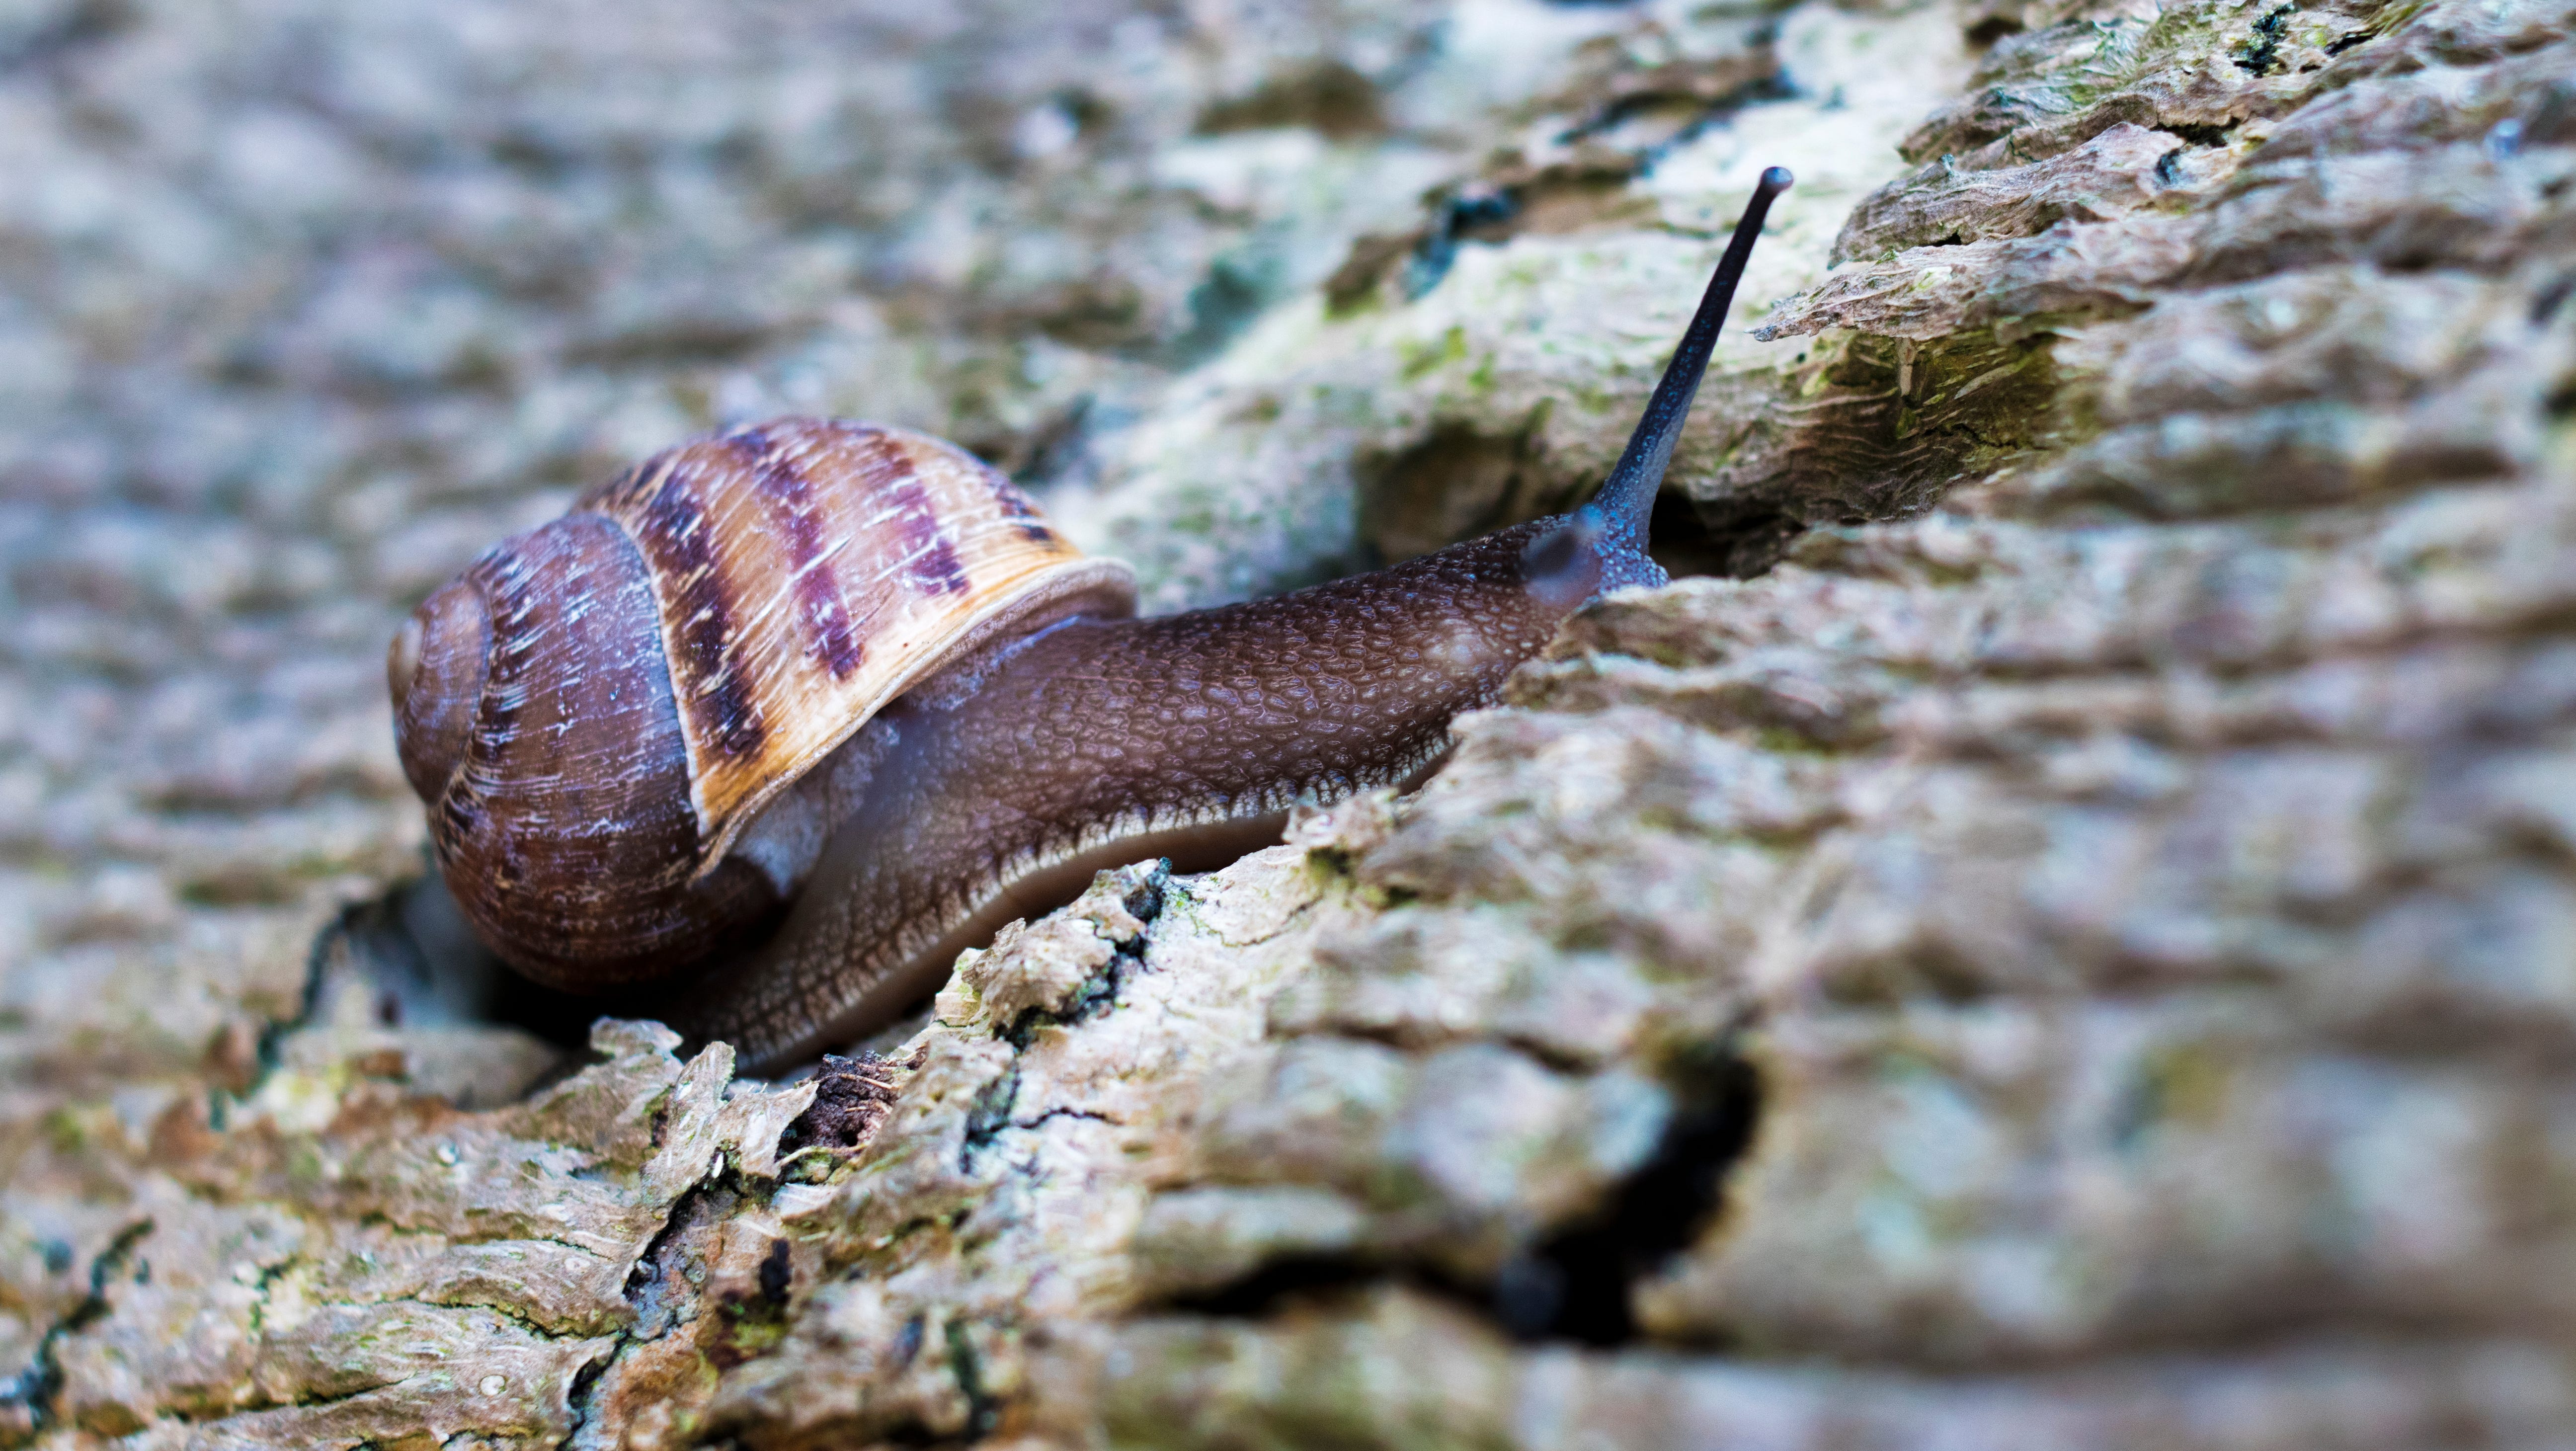 Close-up shot of a snail climbing a tree back